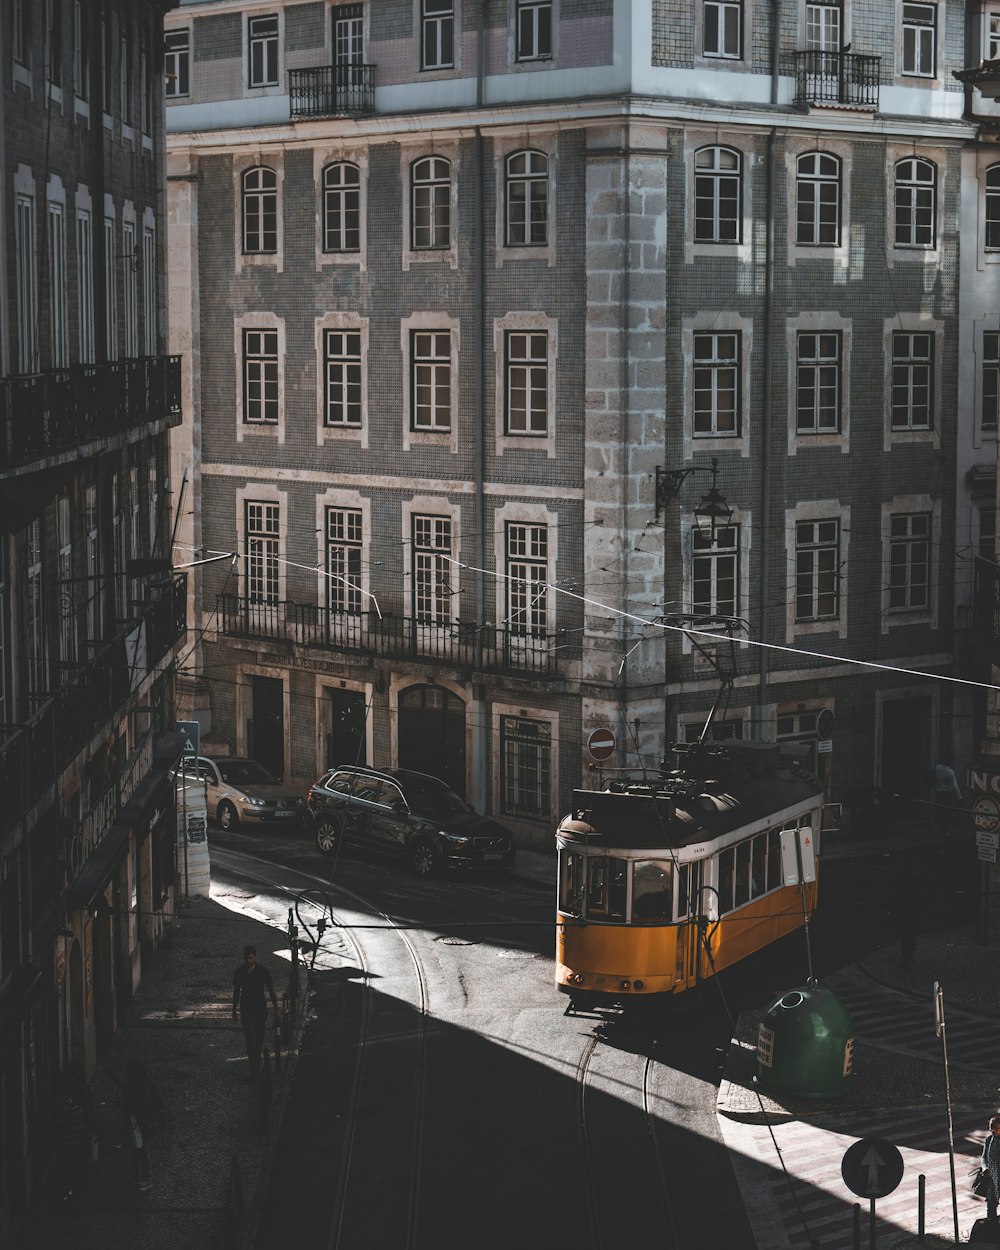 yellow tram roaming on street